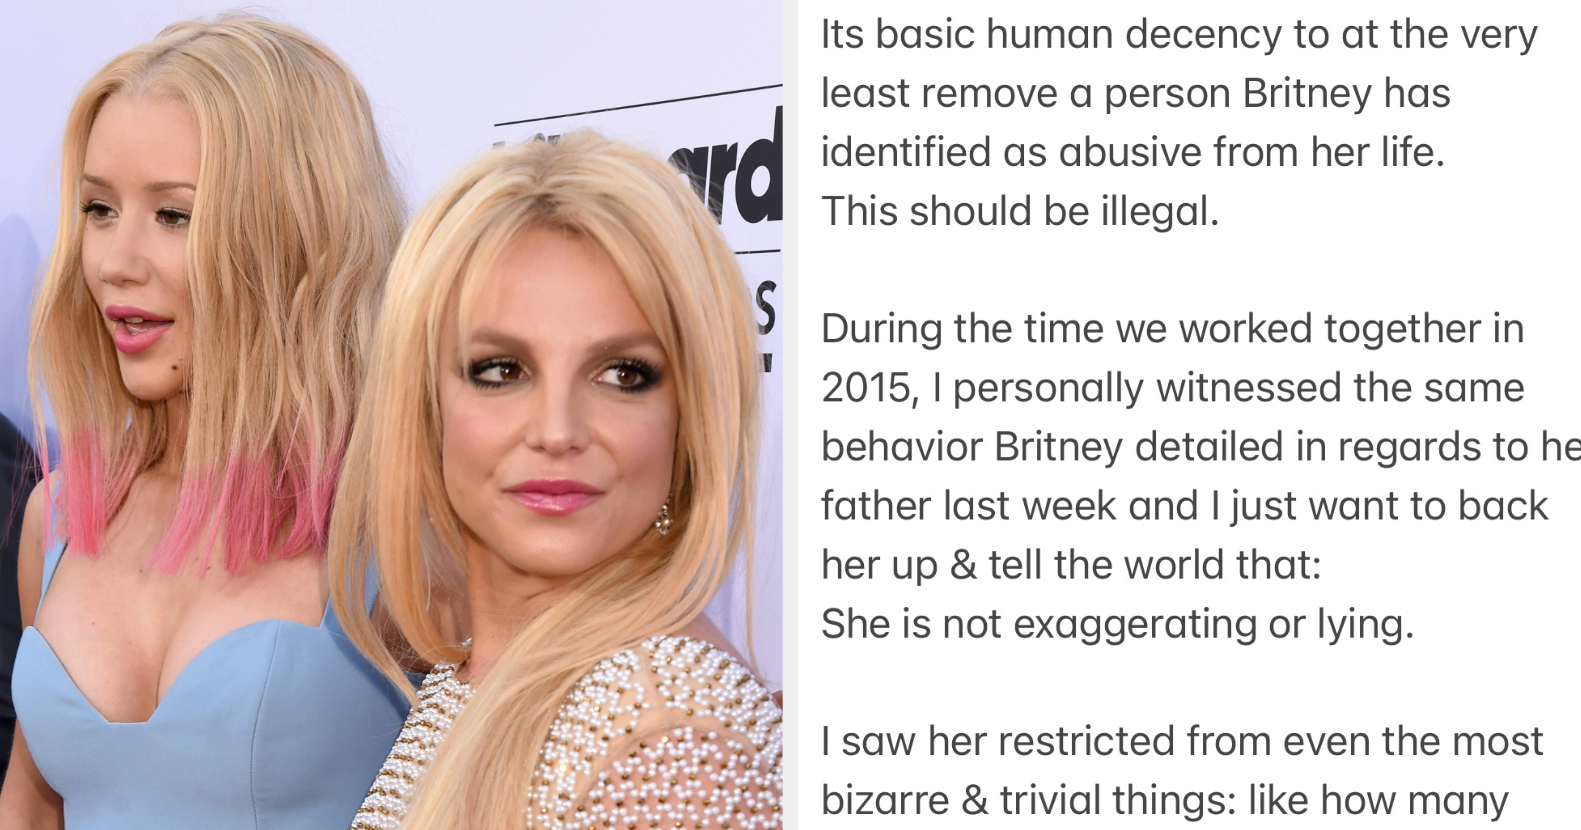 Iggy Azalea On How “Limited” Britney Spears Was Under